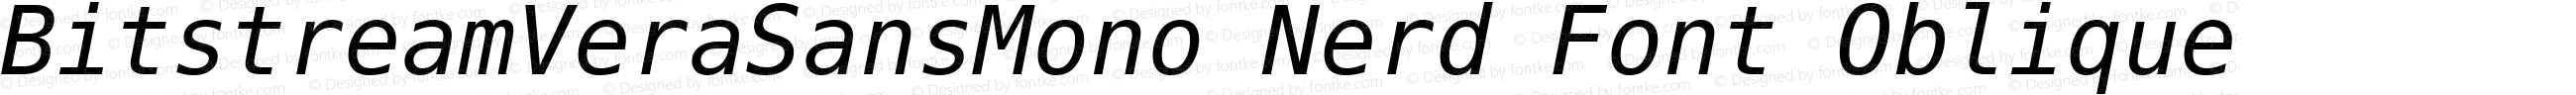 Bitstream Vera Sans Mono Oblique Nerd Font Plus Pomicons